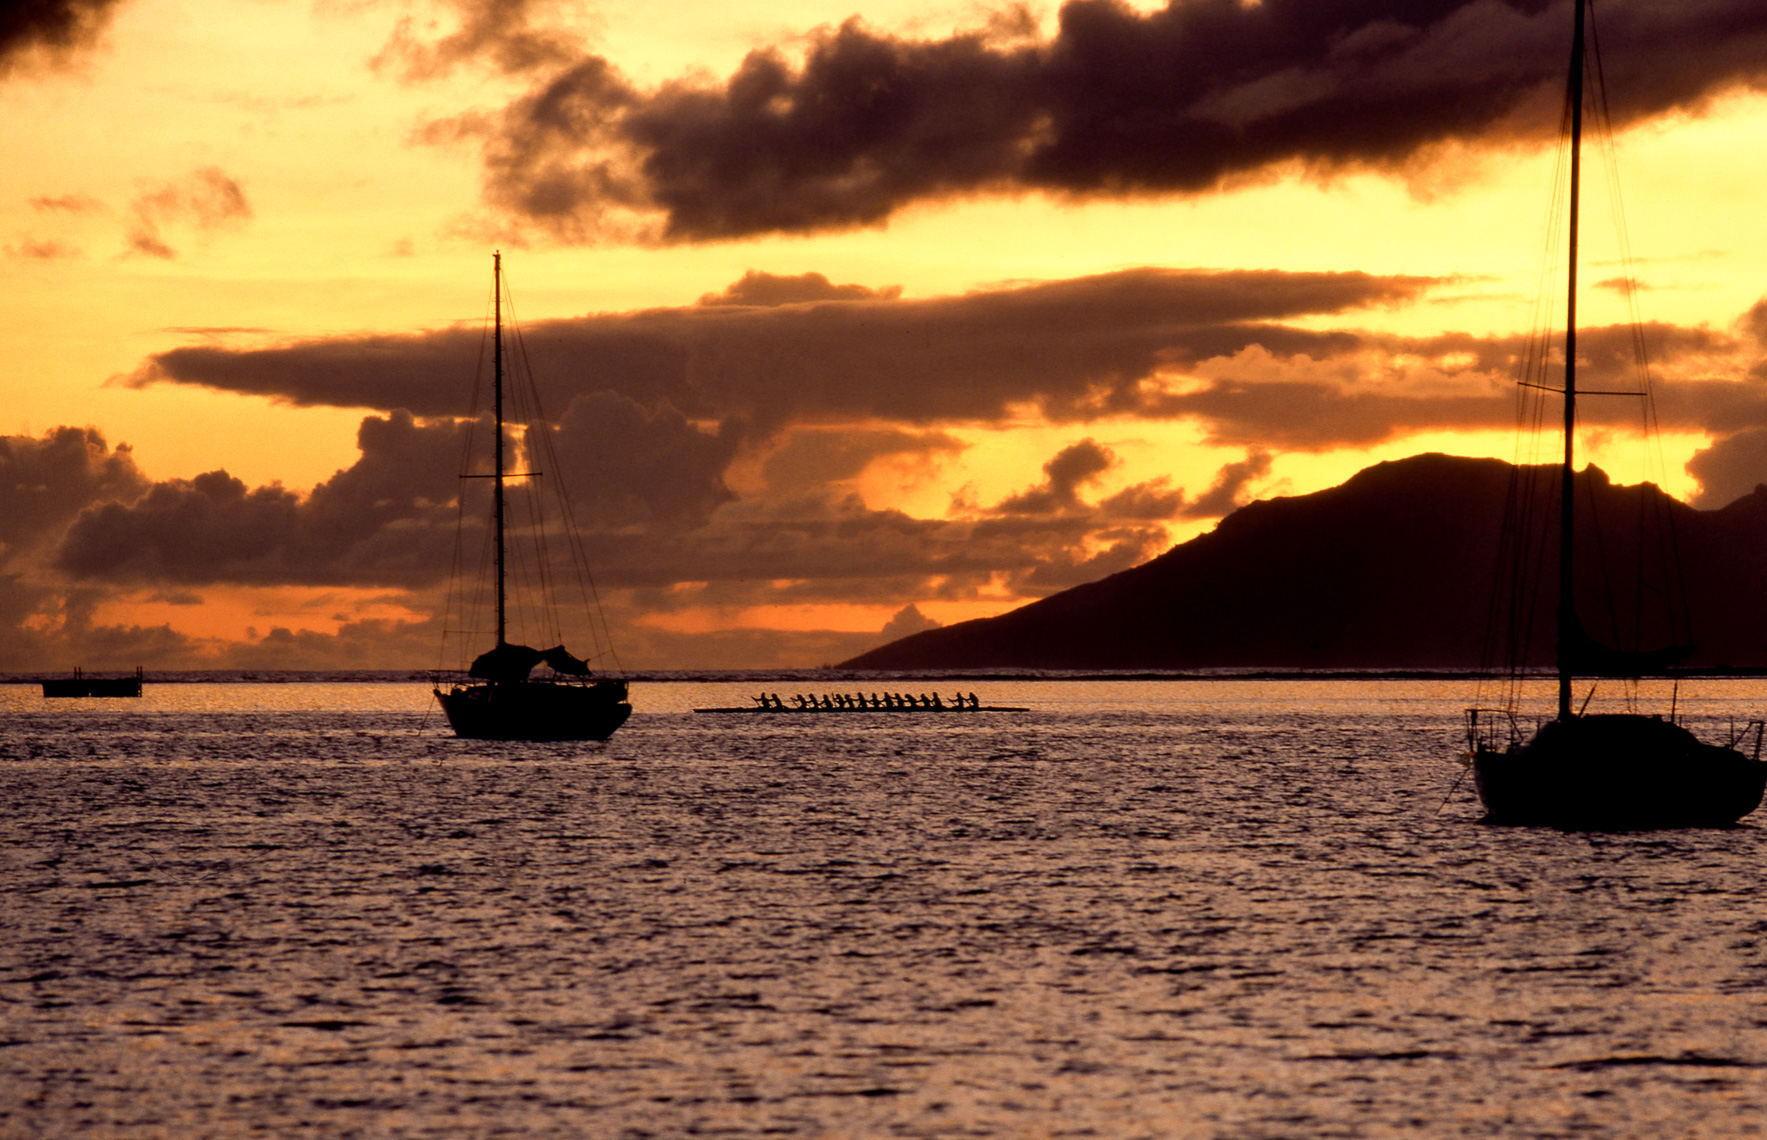 TP_1-29. Serene evening. Island of Tahiti